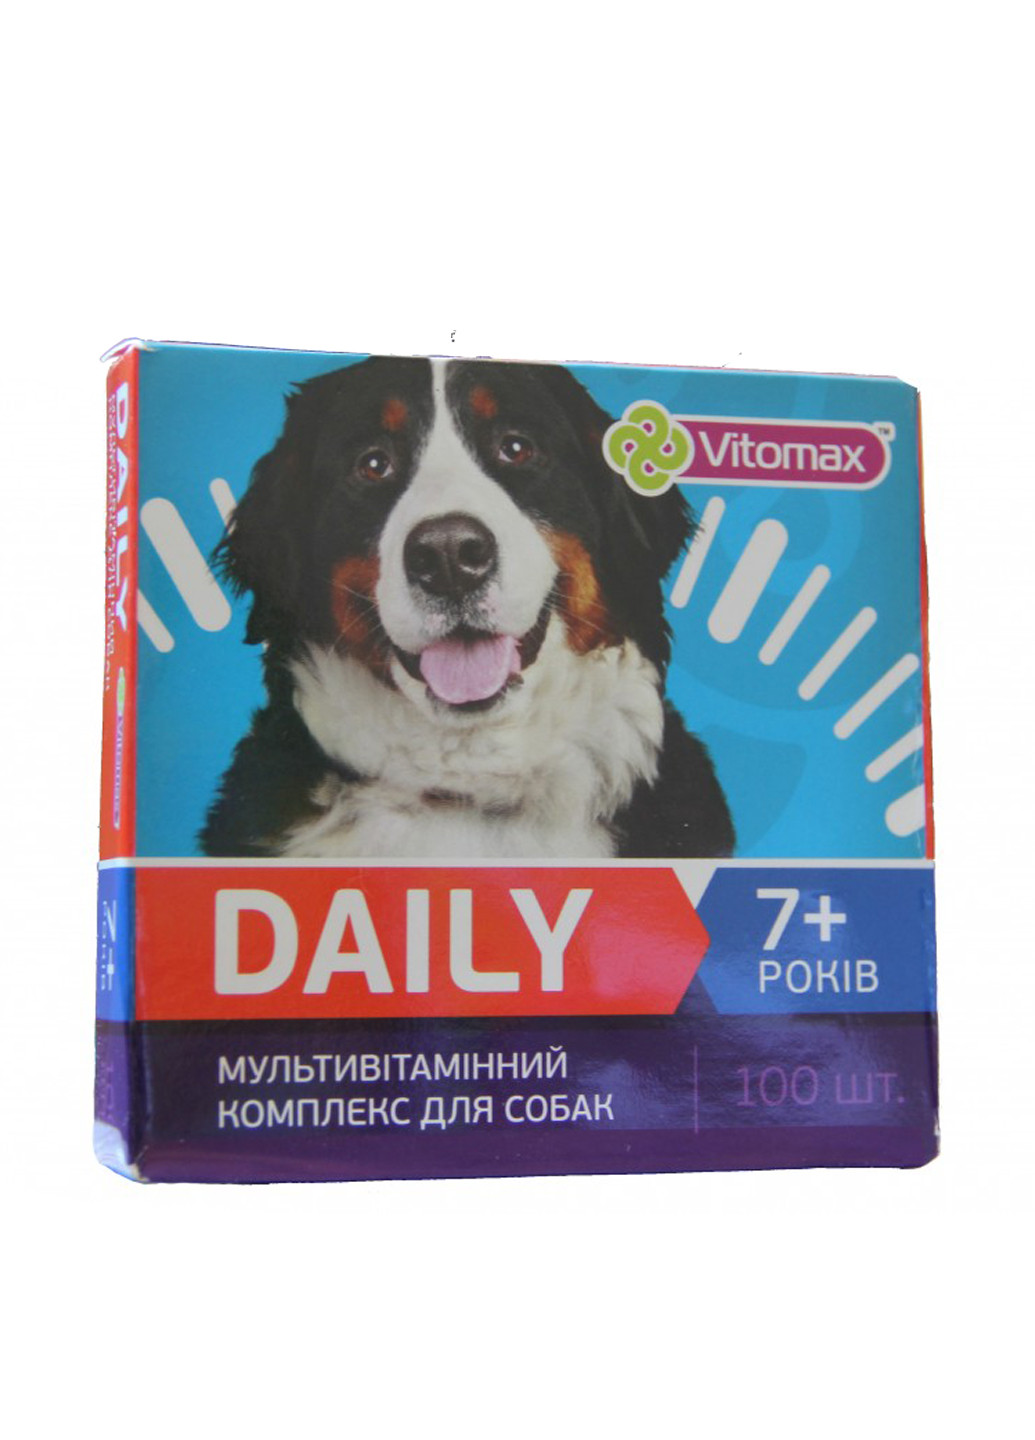 Витамины для собак DAILY (+7 лет), 100 г Vitomax (76393599)